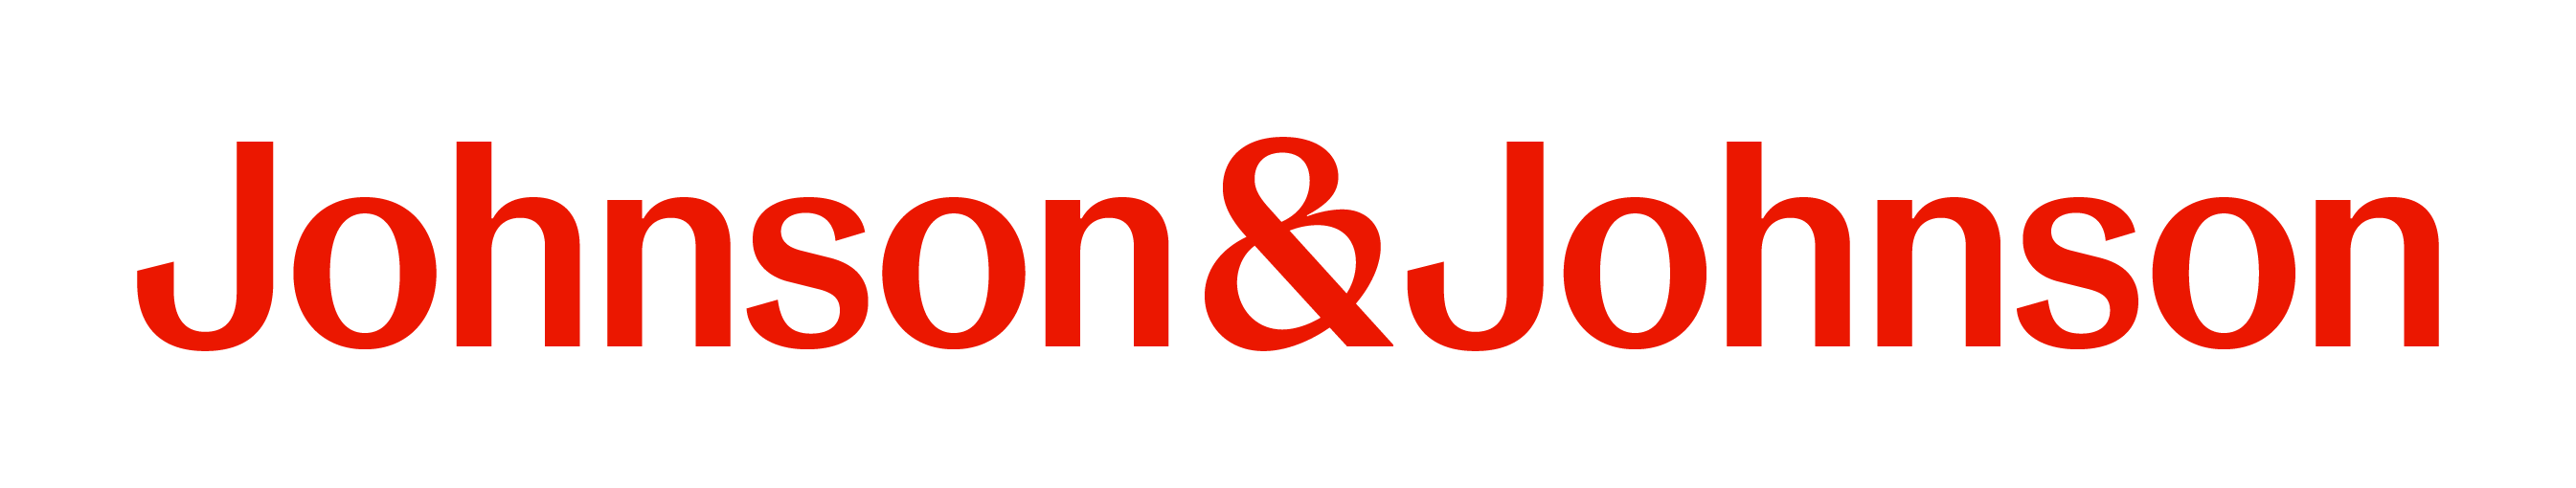 Johnson and Johnson red logo RGB | Partnership with Bright Horizons